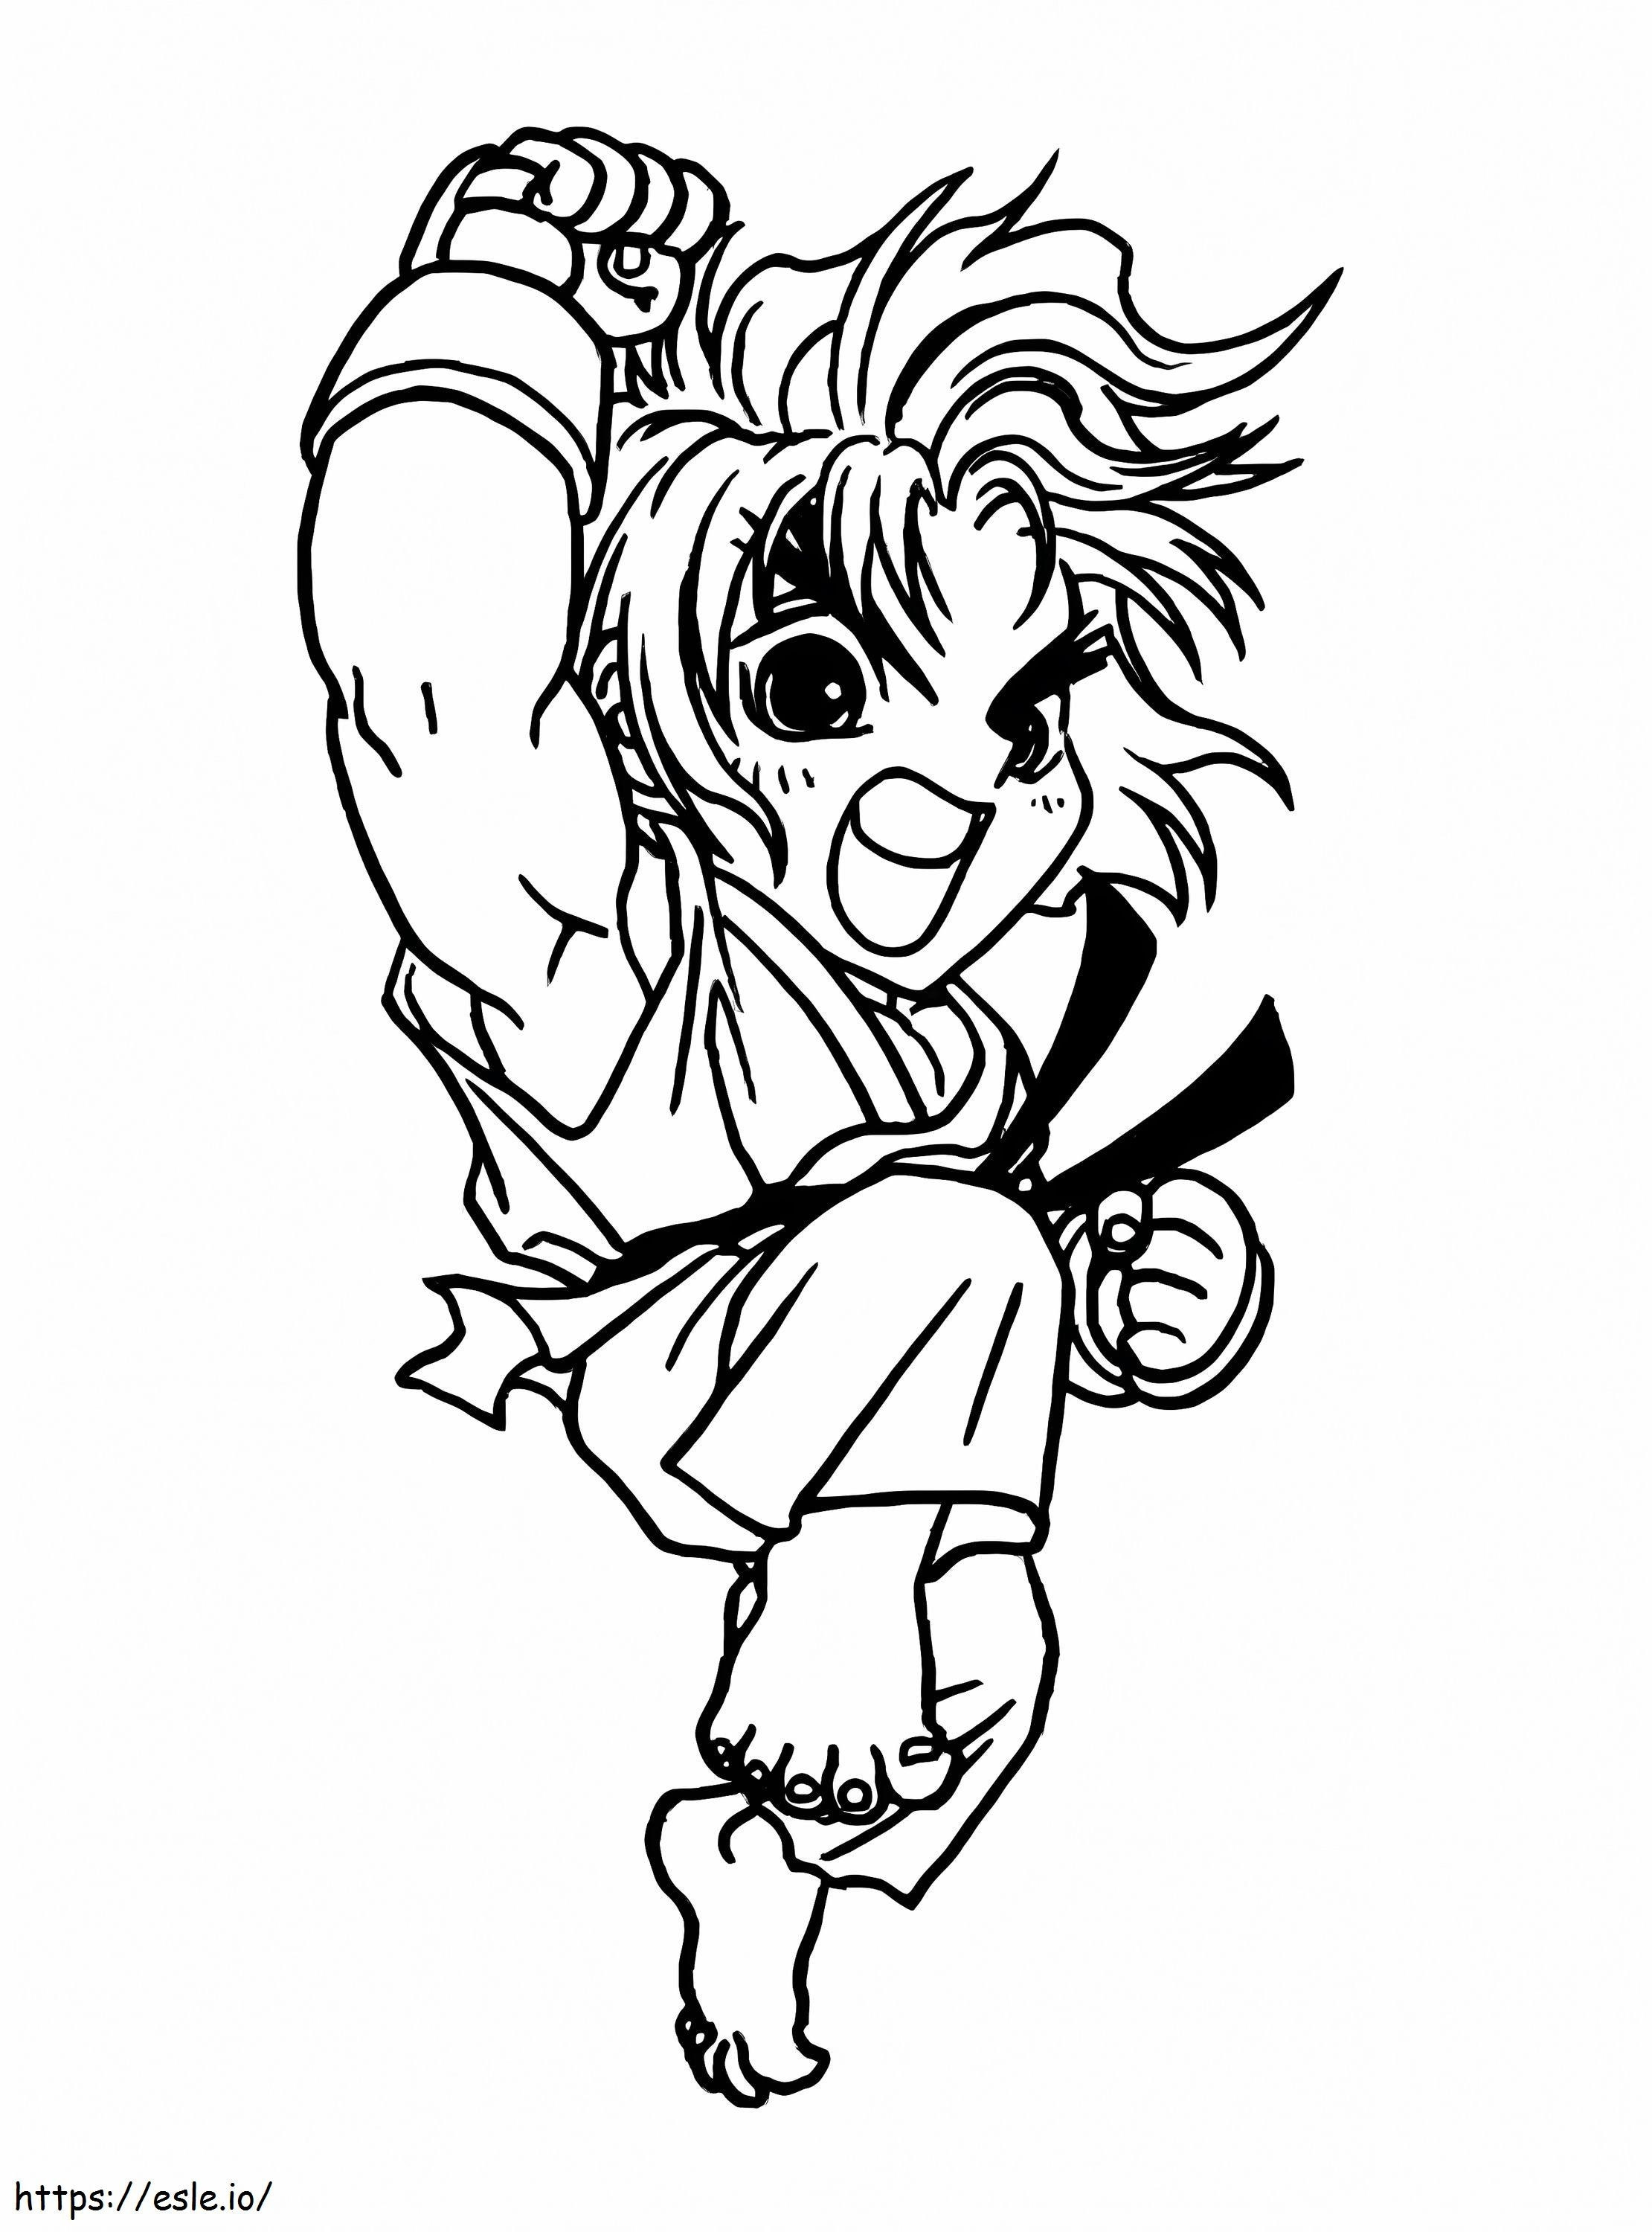 Frio Chibi Ryu coloring page